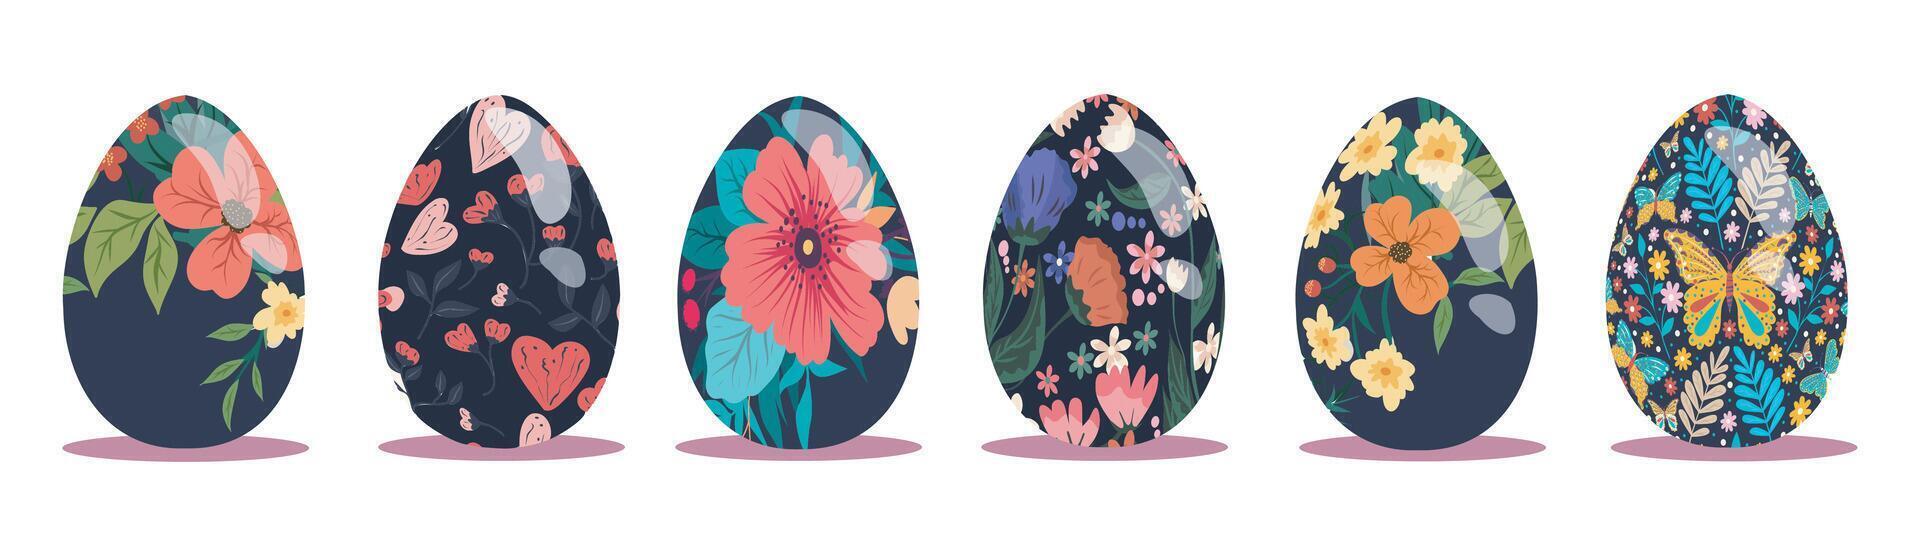 vector contento Pascua de Resurrección huevos decorativo conjunto de brillante Pascua de Resurrección huevos Pascua de Resurrección huevos con floral ornamento modelo